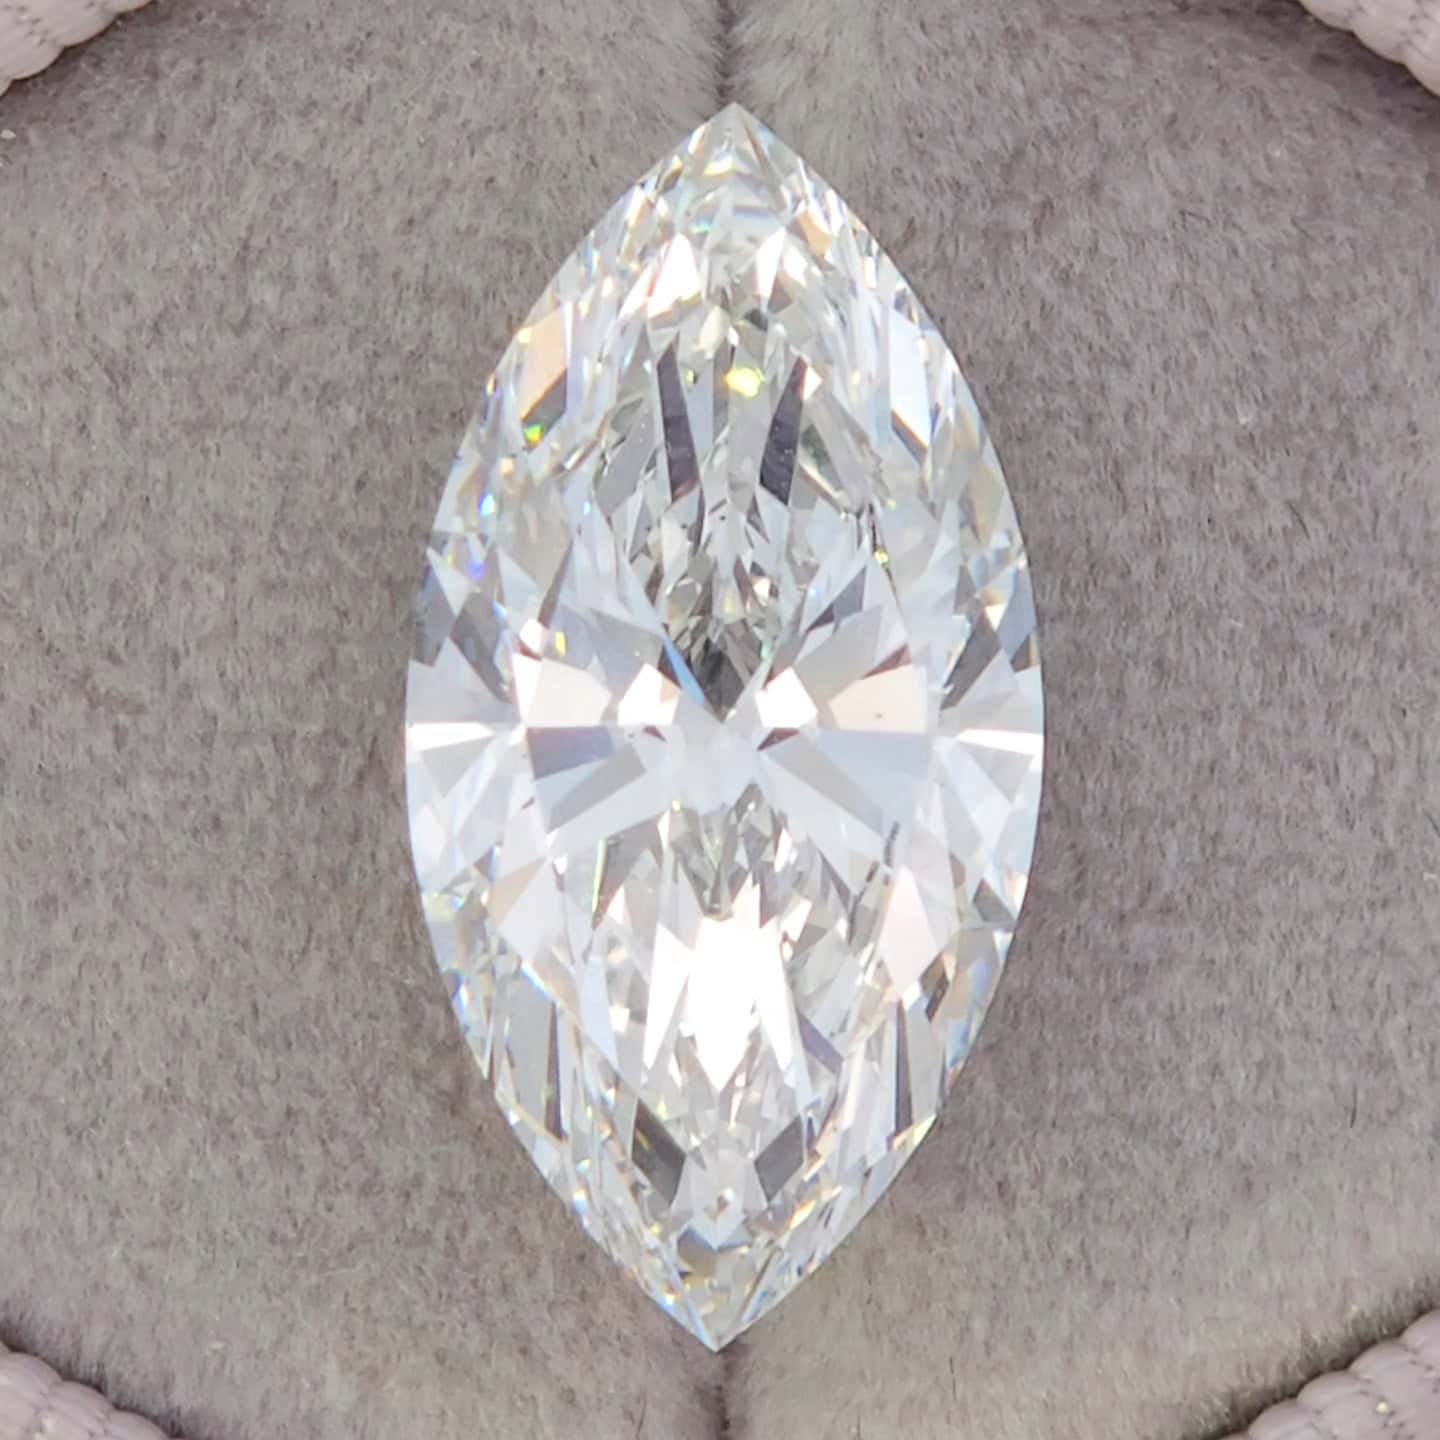 Lowest Price Eco Diamond - 6.28 ct Marquise F-VS1 IGI LG602389547 - Excellent symmetry, Excellent polish.